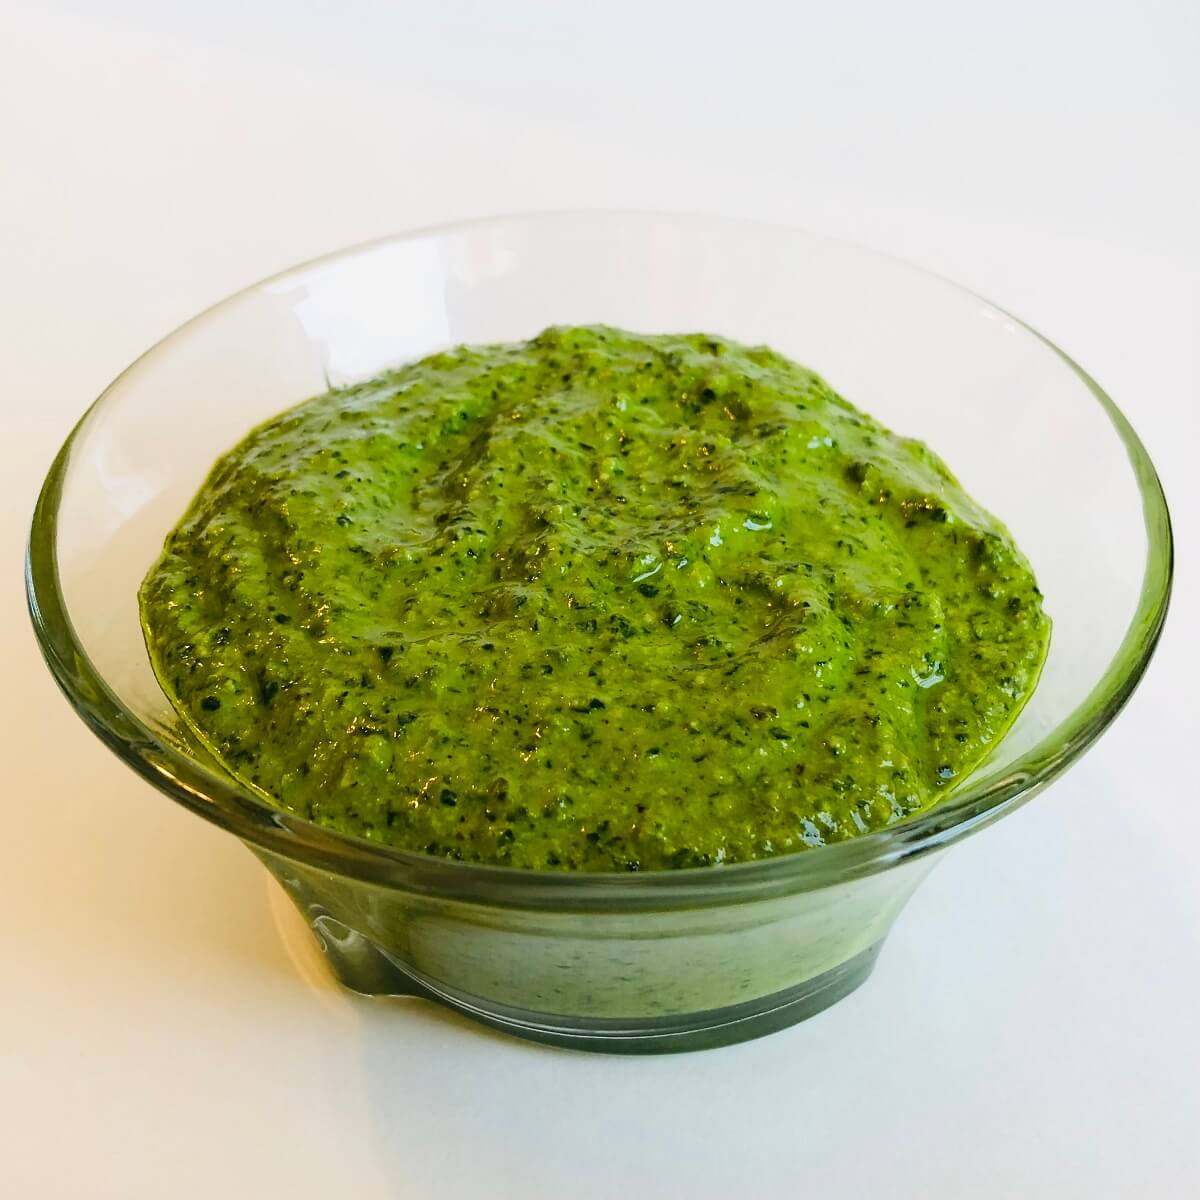 A glass bowl of vegan walnut parsley pesto sauce.